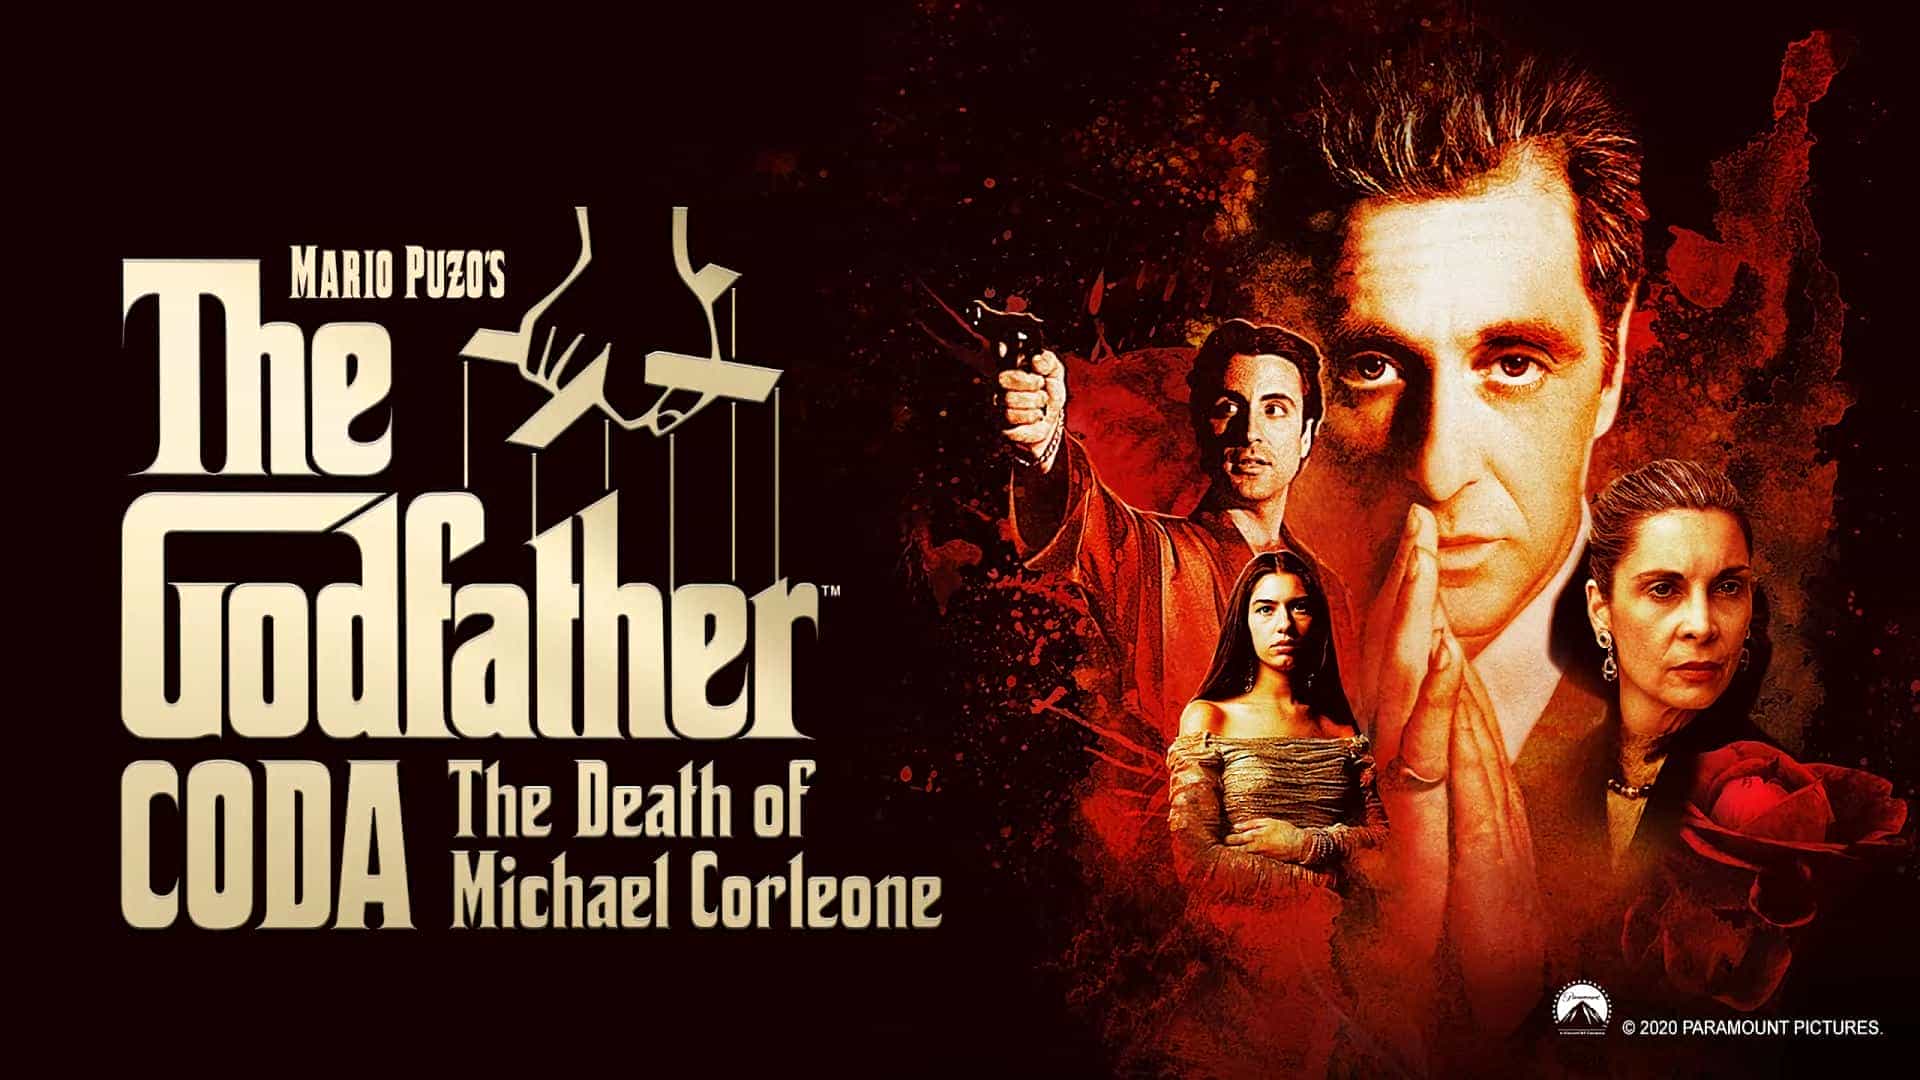 The Godfather Coda - The Death of Michael Corleone (15)